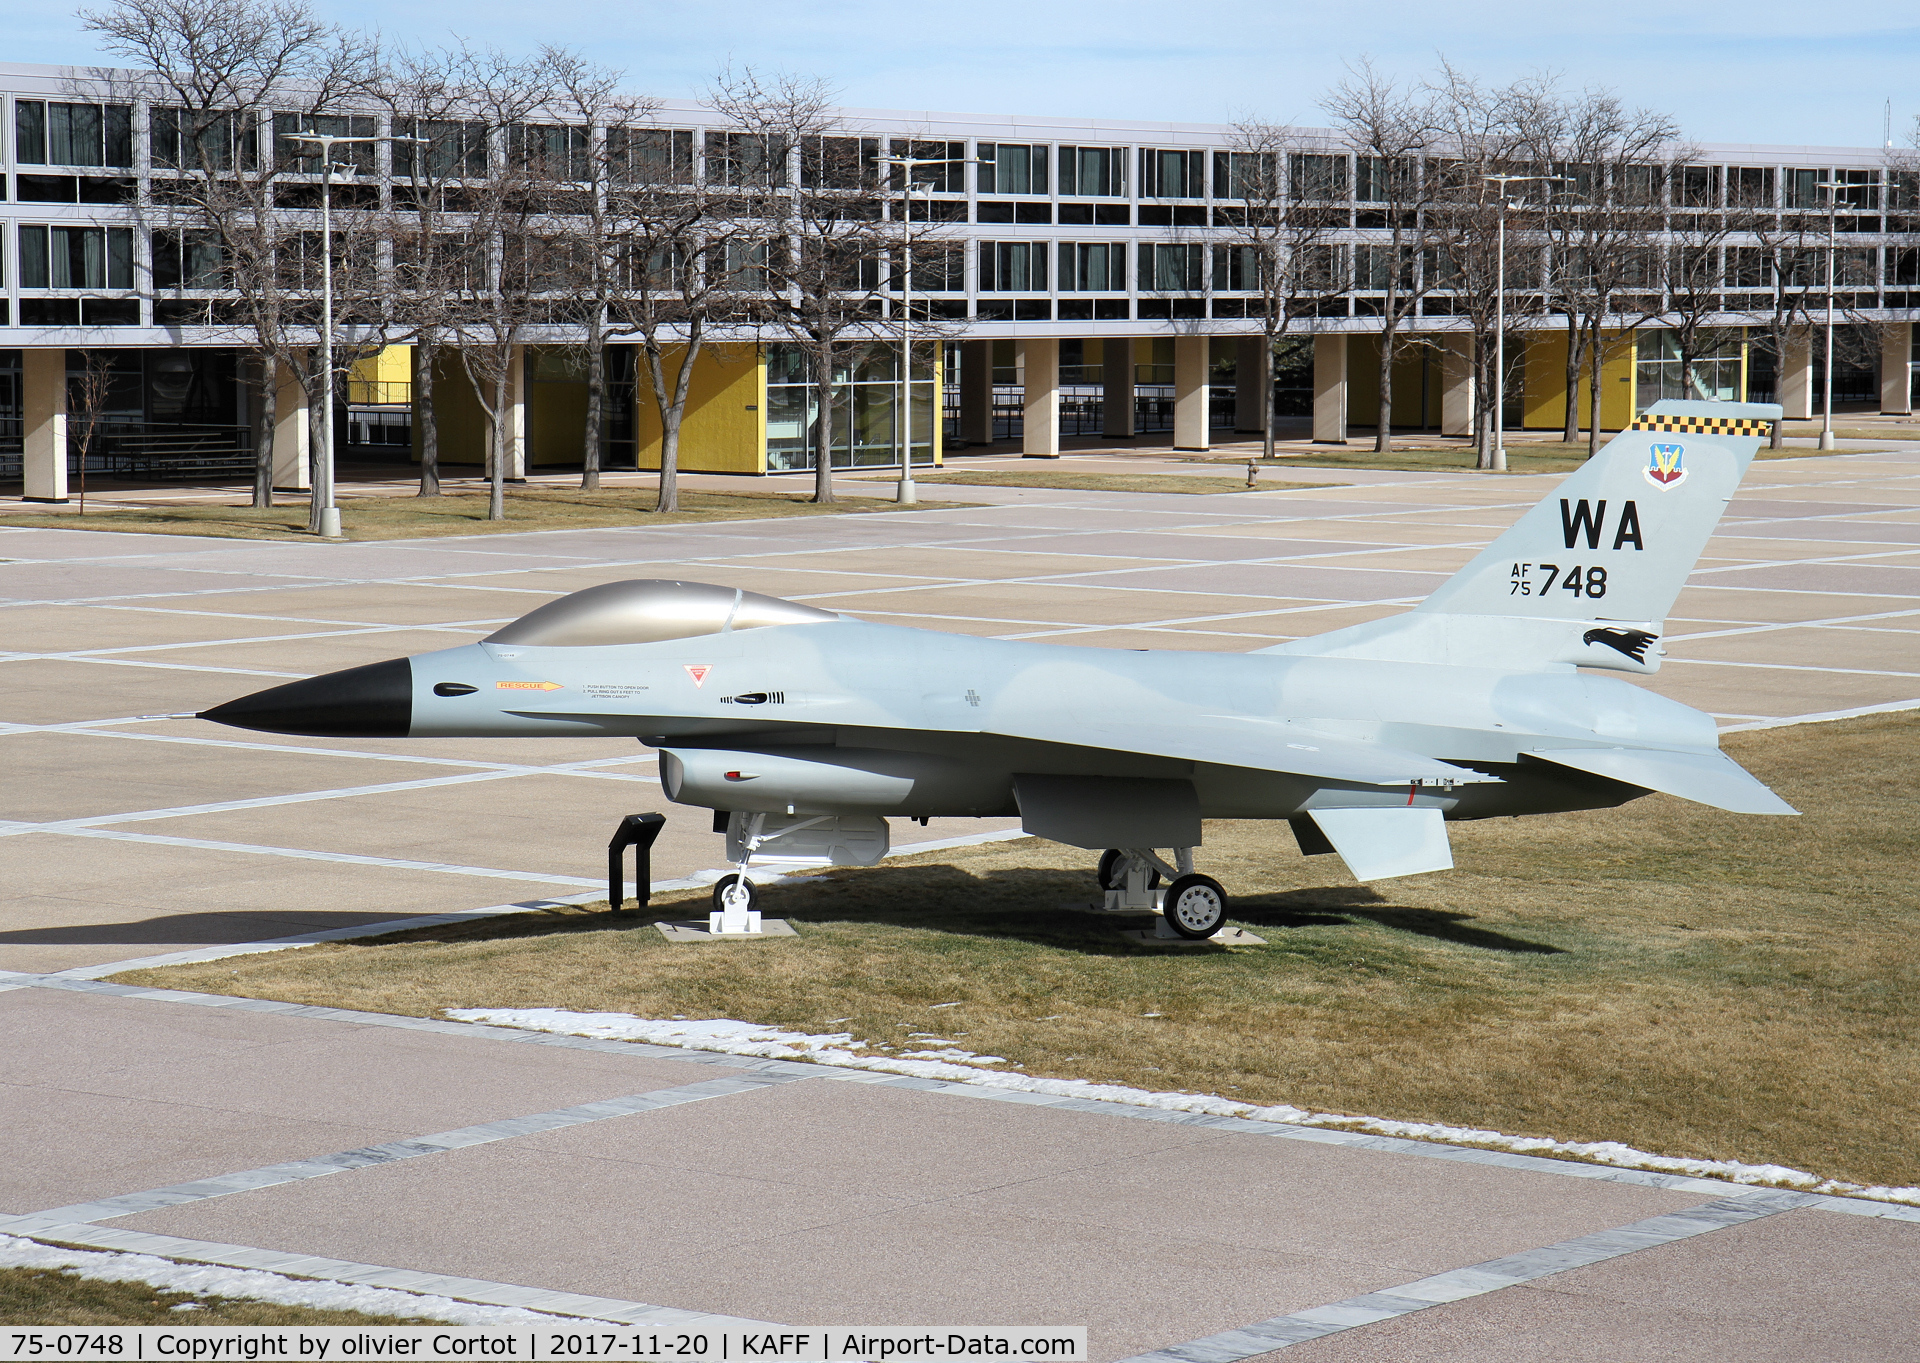 75-0748, 1975 General Dynamics YF-16A Fighting Falcon C/N 61-4, strange paint choice...